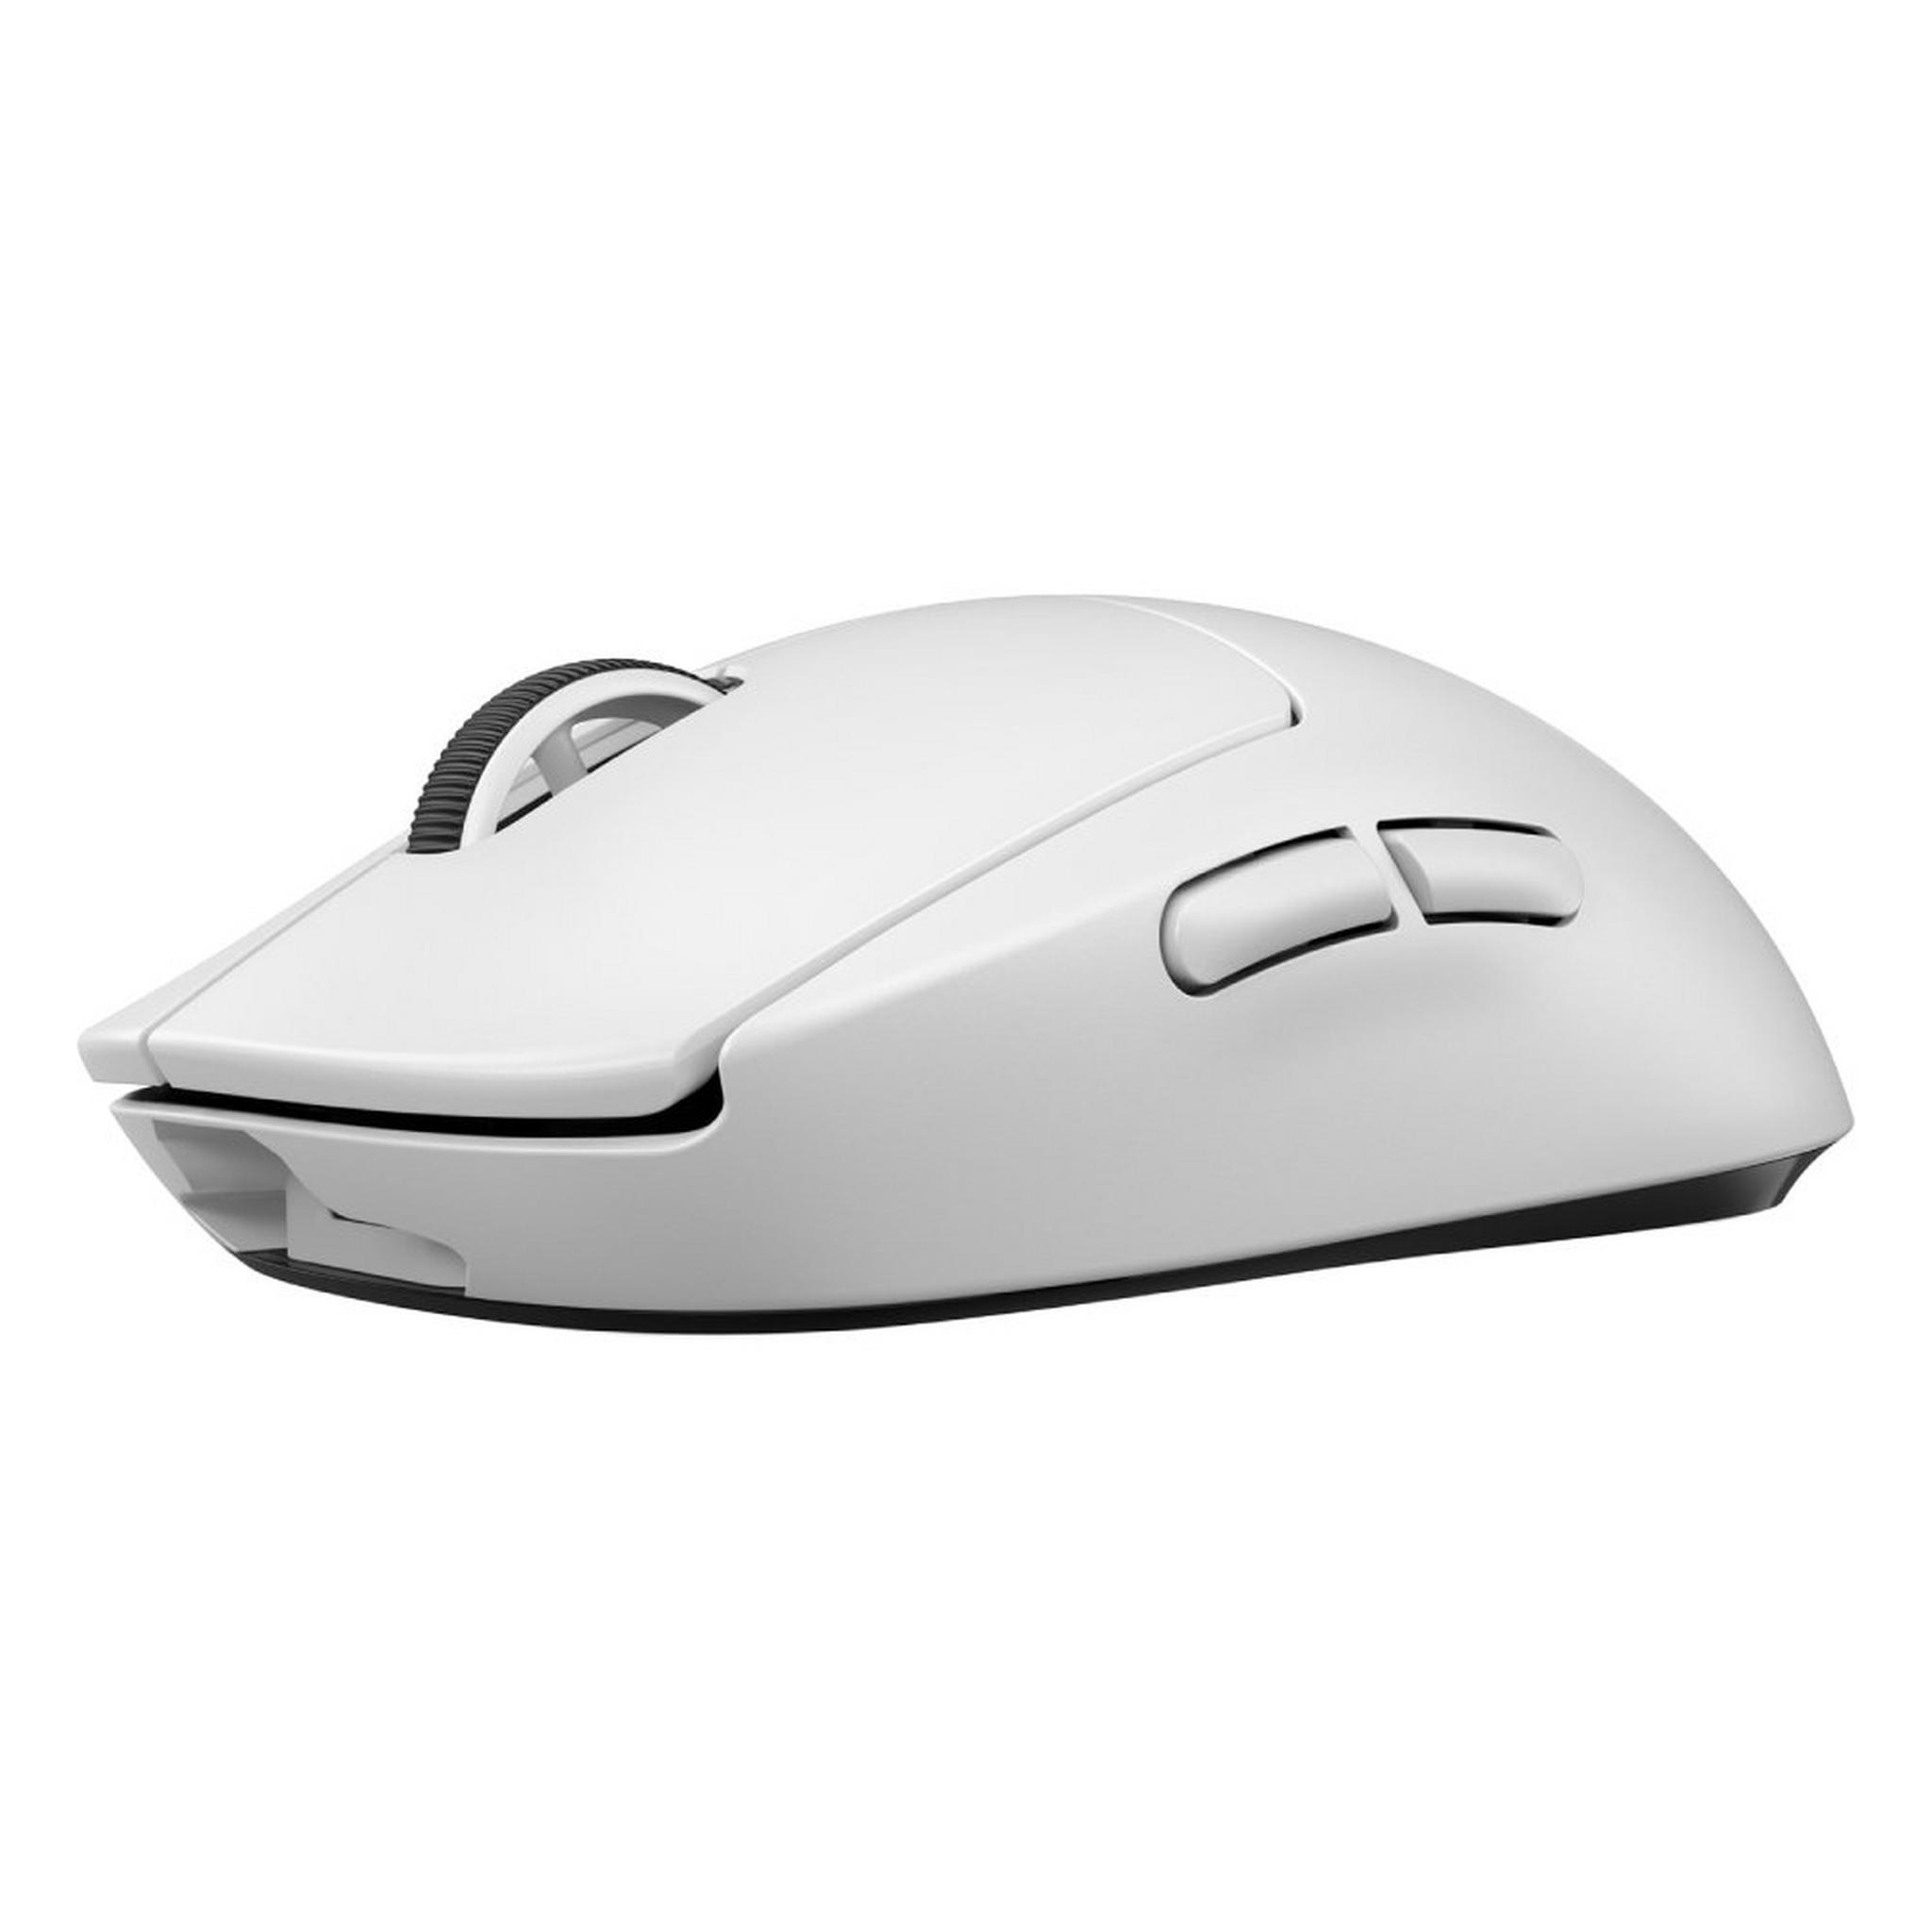 Logitech Pro X SuperLight Wireless Mouse - White